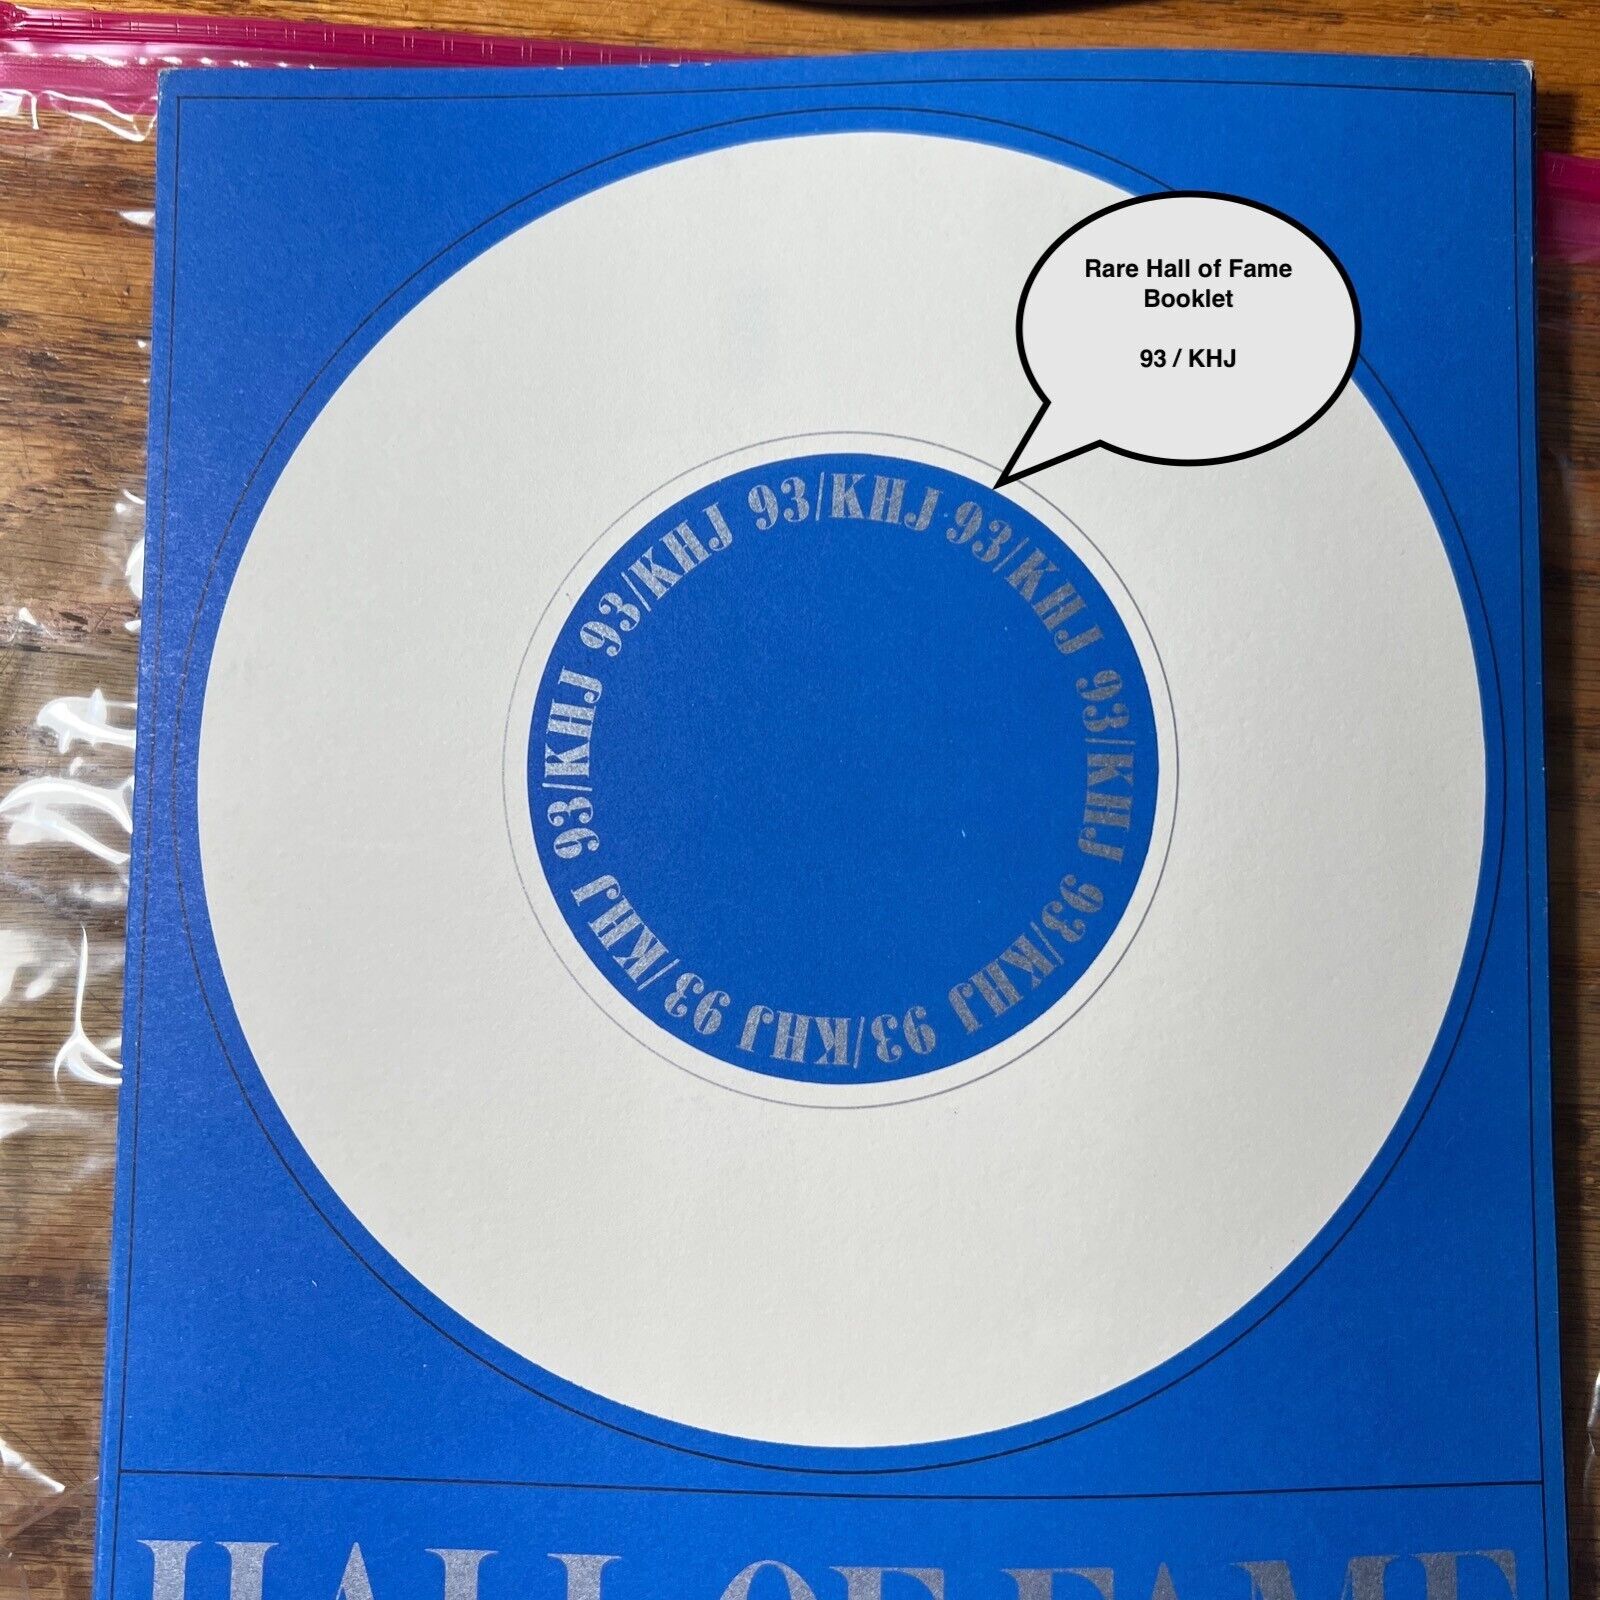 RARE 93/KHJ Hall of Fame Booklet Radio Station Memorabilia (FH-152)